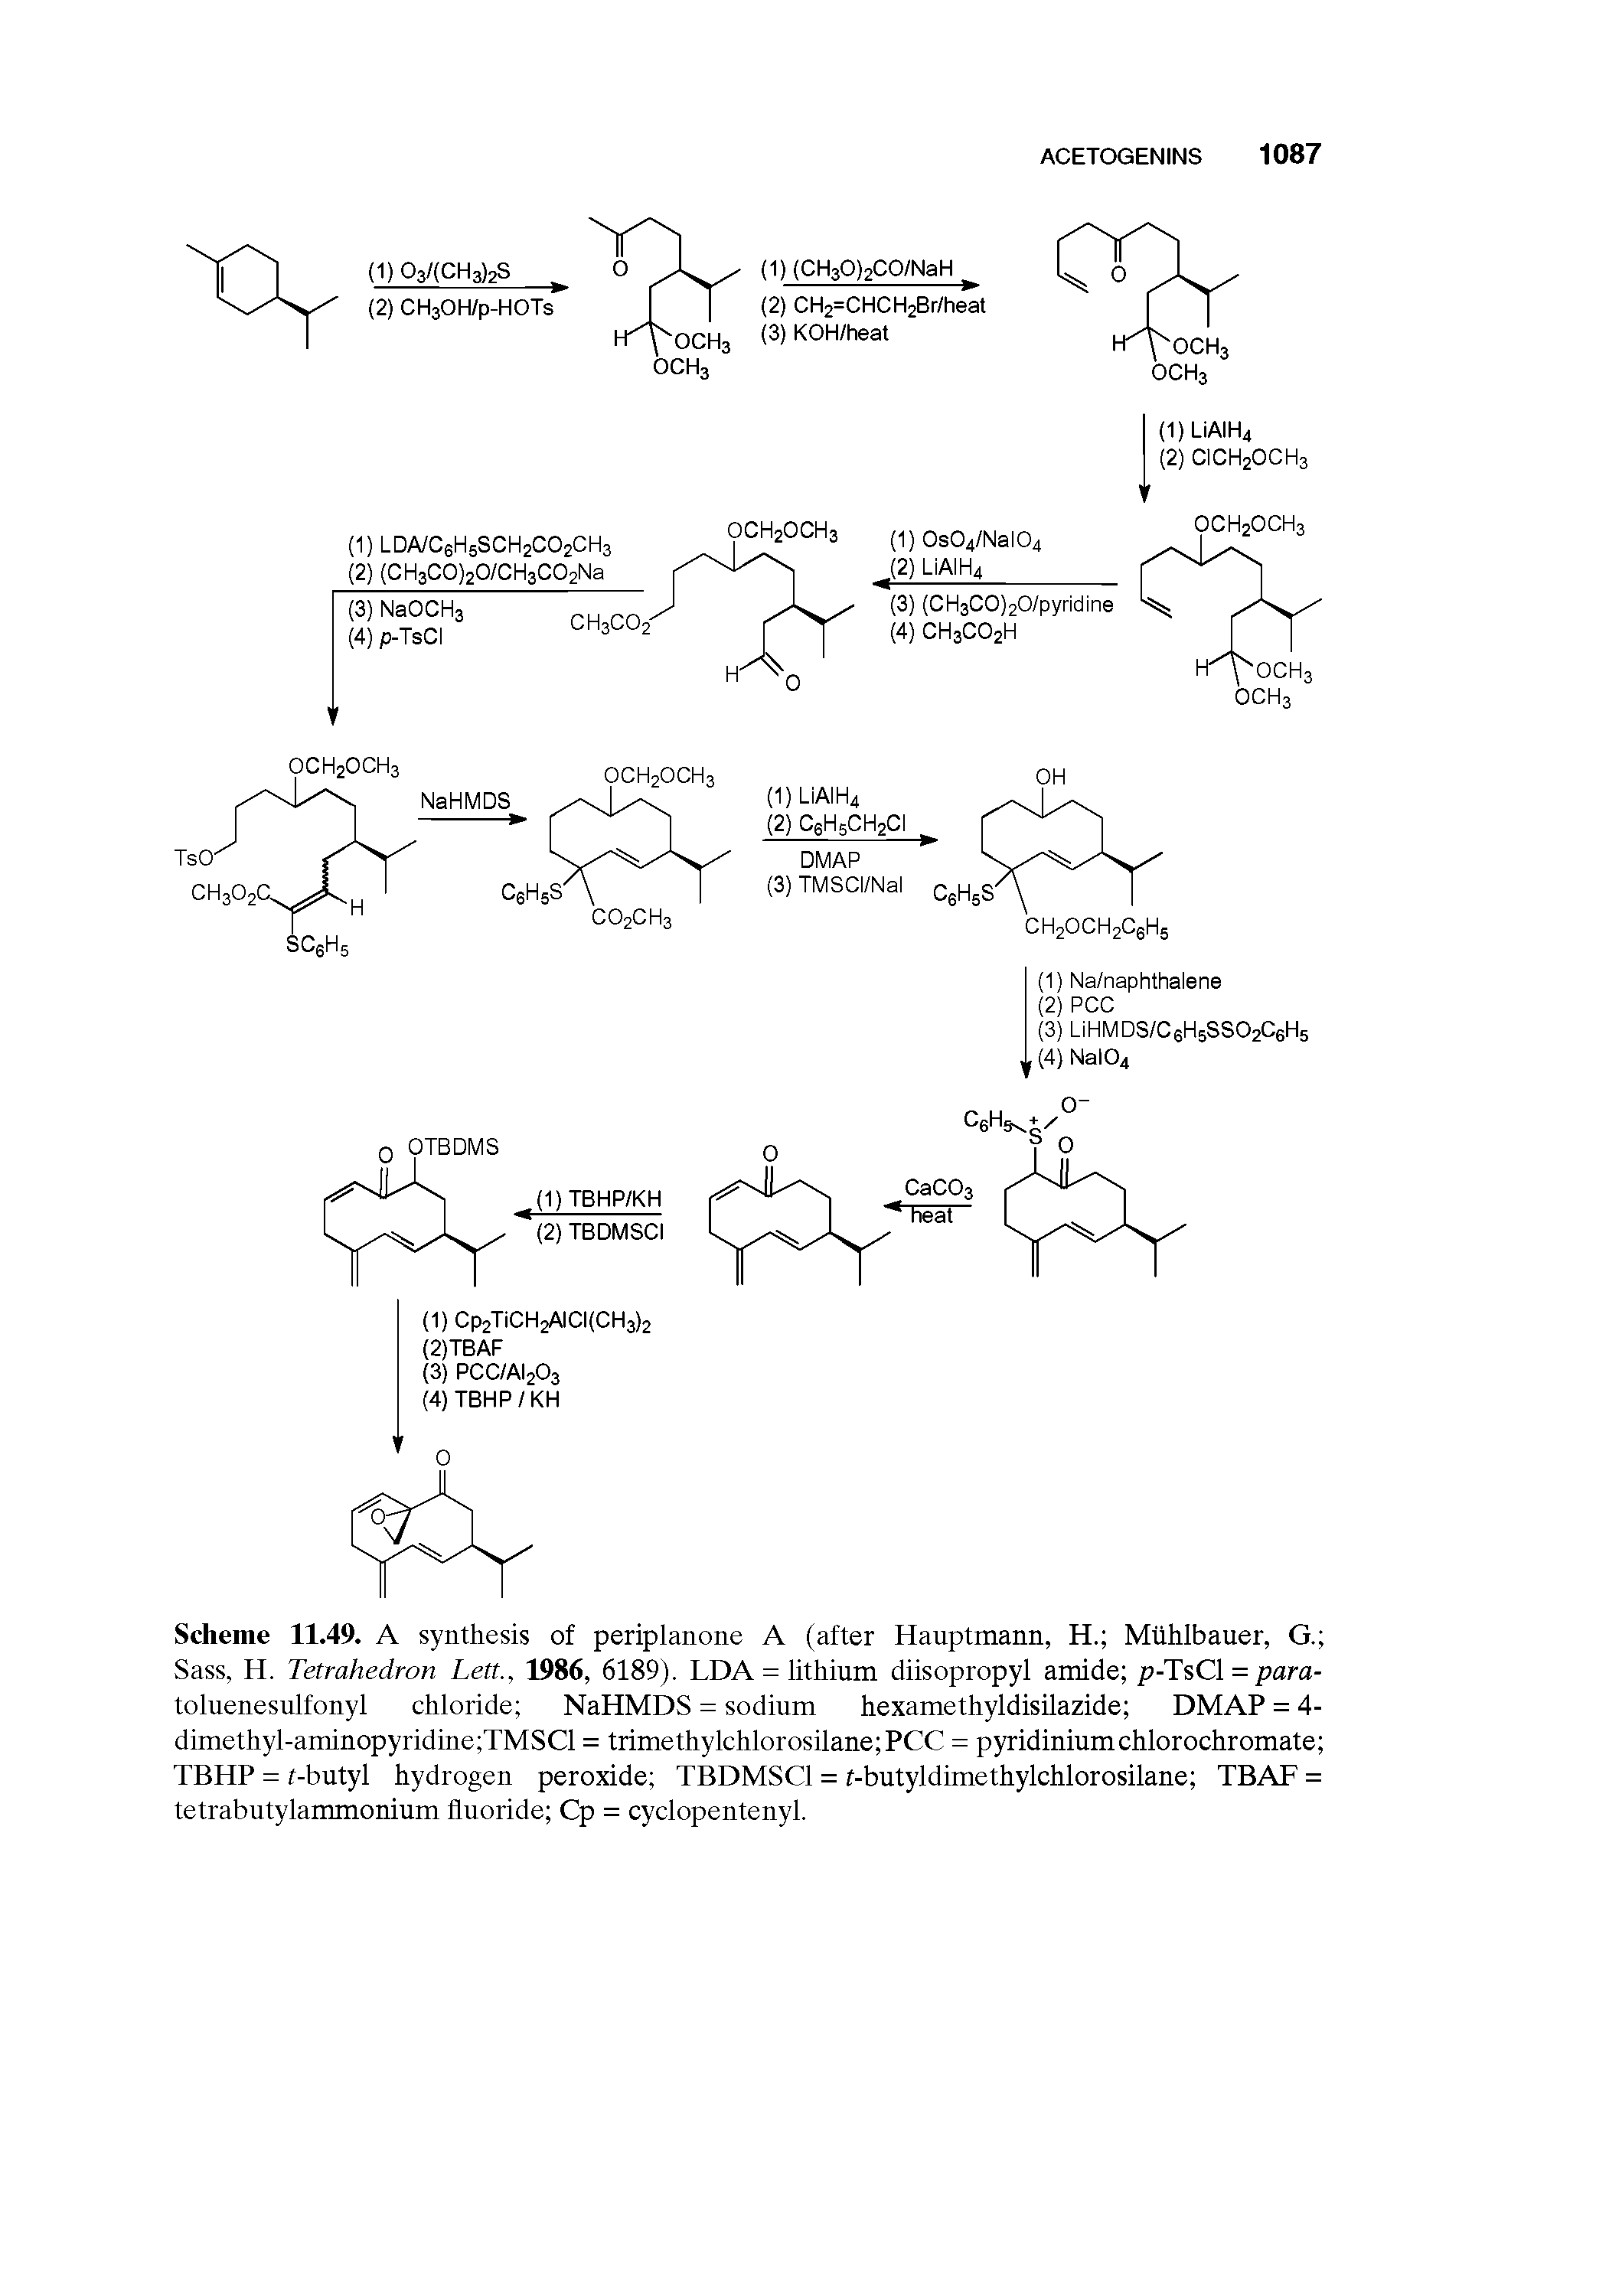 Scheme 11.49. A synthesis of periplanone A (after Hauptmann, H. Mtlhlbauer, G. Sass, H. Tetrahedron Lett., 1986, 6189). LDA = lithium diisopropyl amide p-TsCl = para-toluenesulfonyl chloride NaHMDS = sodium hexamethyldisilazide DMAP = 4-dimethyl-aminopyridine TMSCl = trimethylchlorosilane PCC = pyridiniumchlorochromate TBHP = f-butyl hydrogen peroxide TBDMSCI = f-butyldimethylchlorosilane TBAF = tetrabutylammonium fluoride Cp = cyclopentenyl.